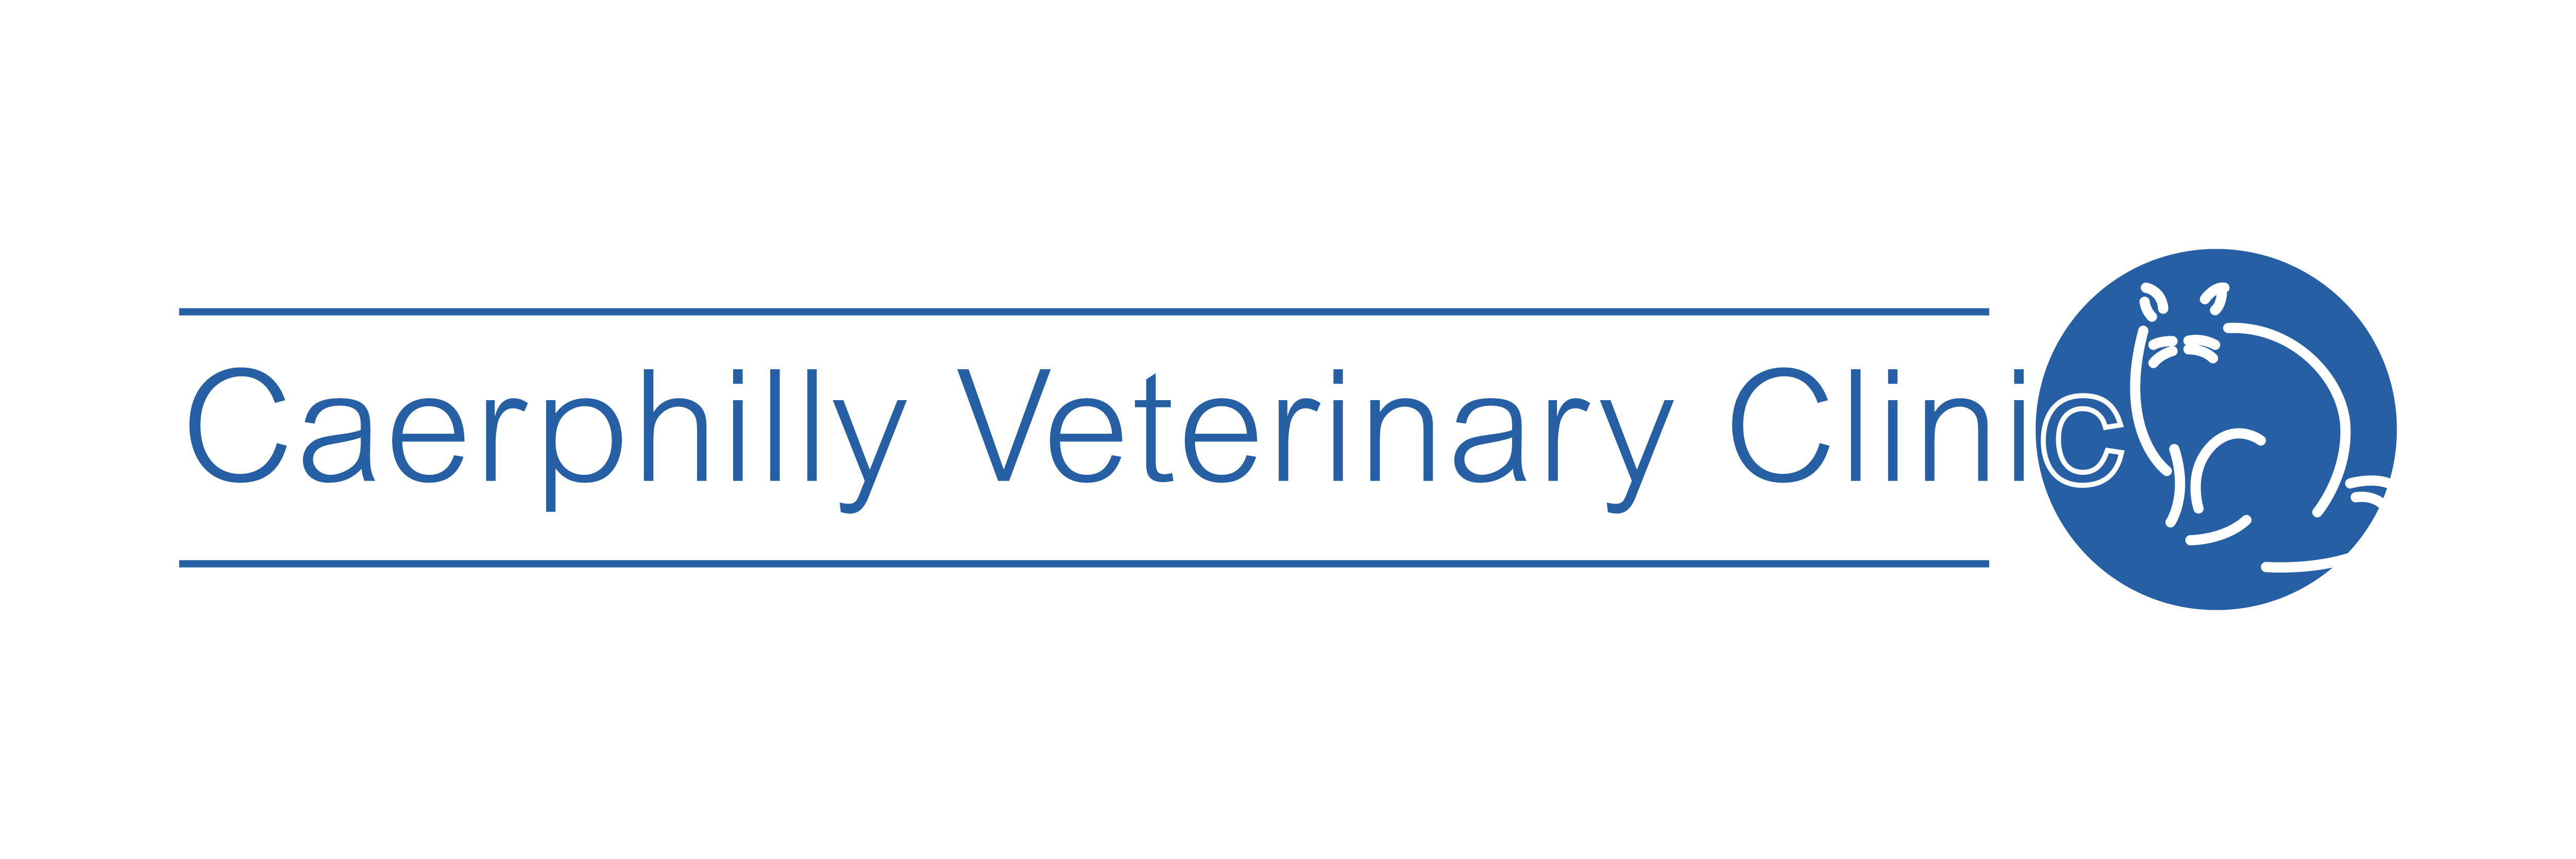 Caerphilly Veterinary Clinic